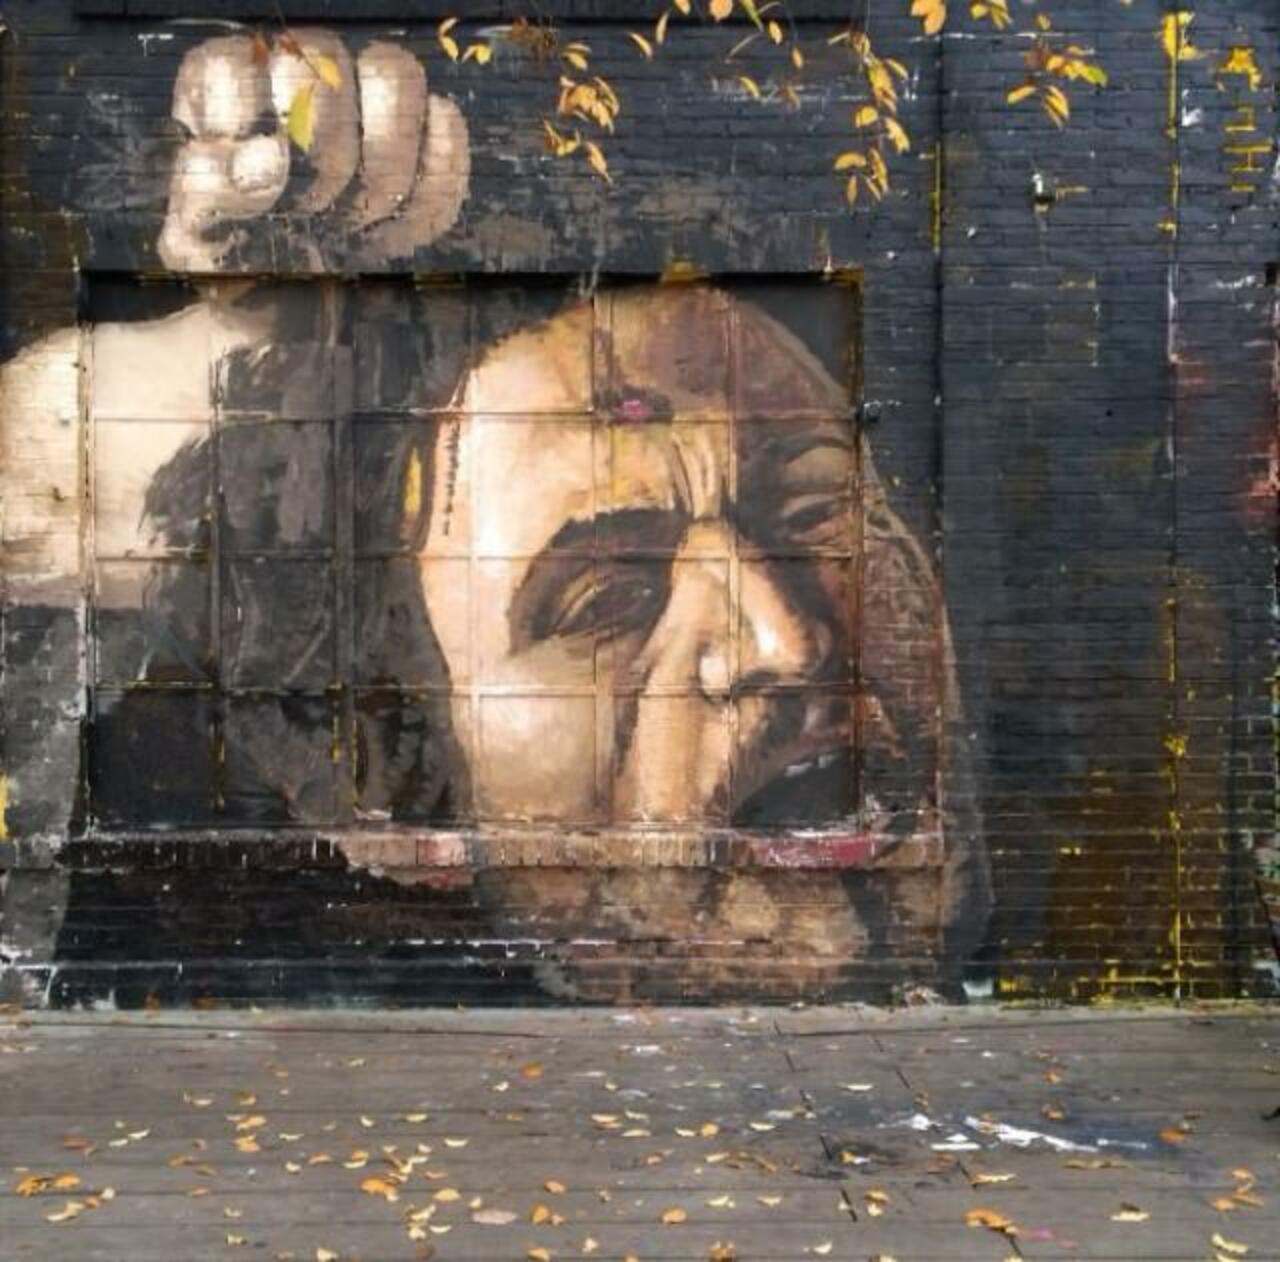 Artist #Alanizart new Street Art 'David & Goliath' for Urban Spree in Berlin 

#art #streetart http://t.co/PoKhI3C06D